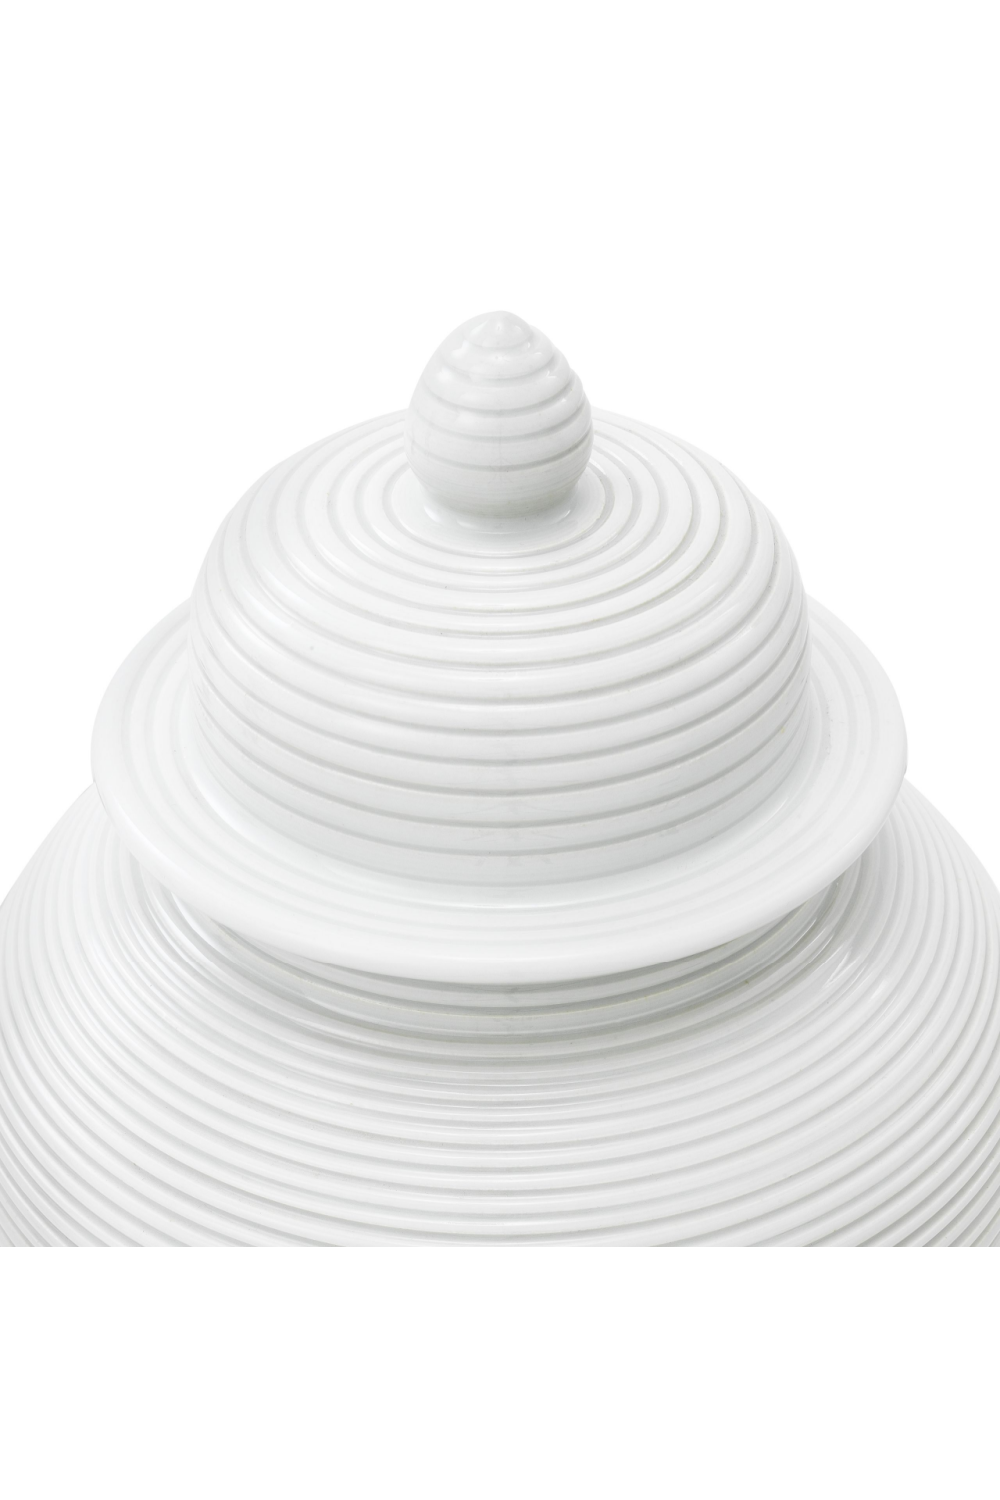 White Porcelain Jar | Eichholtz Celestine S | OROA.com